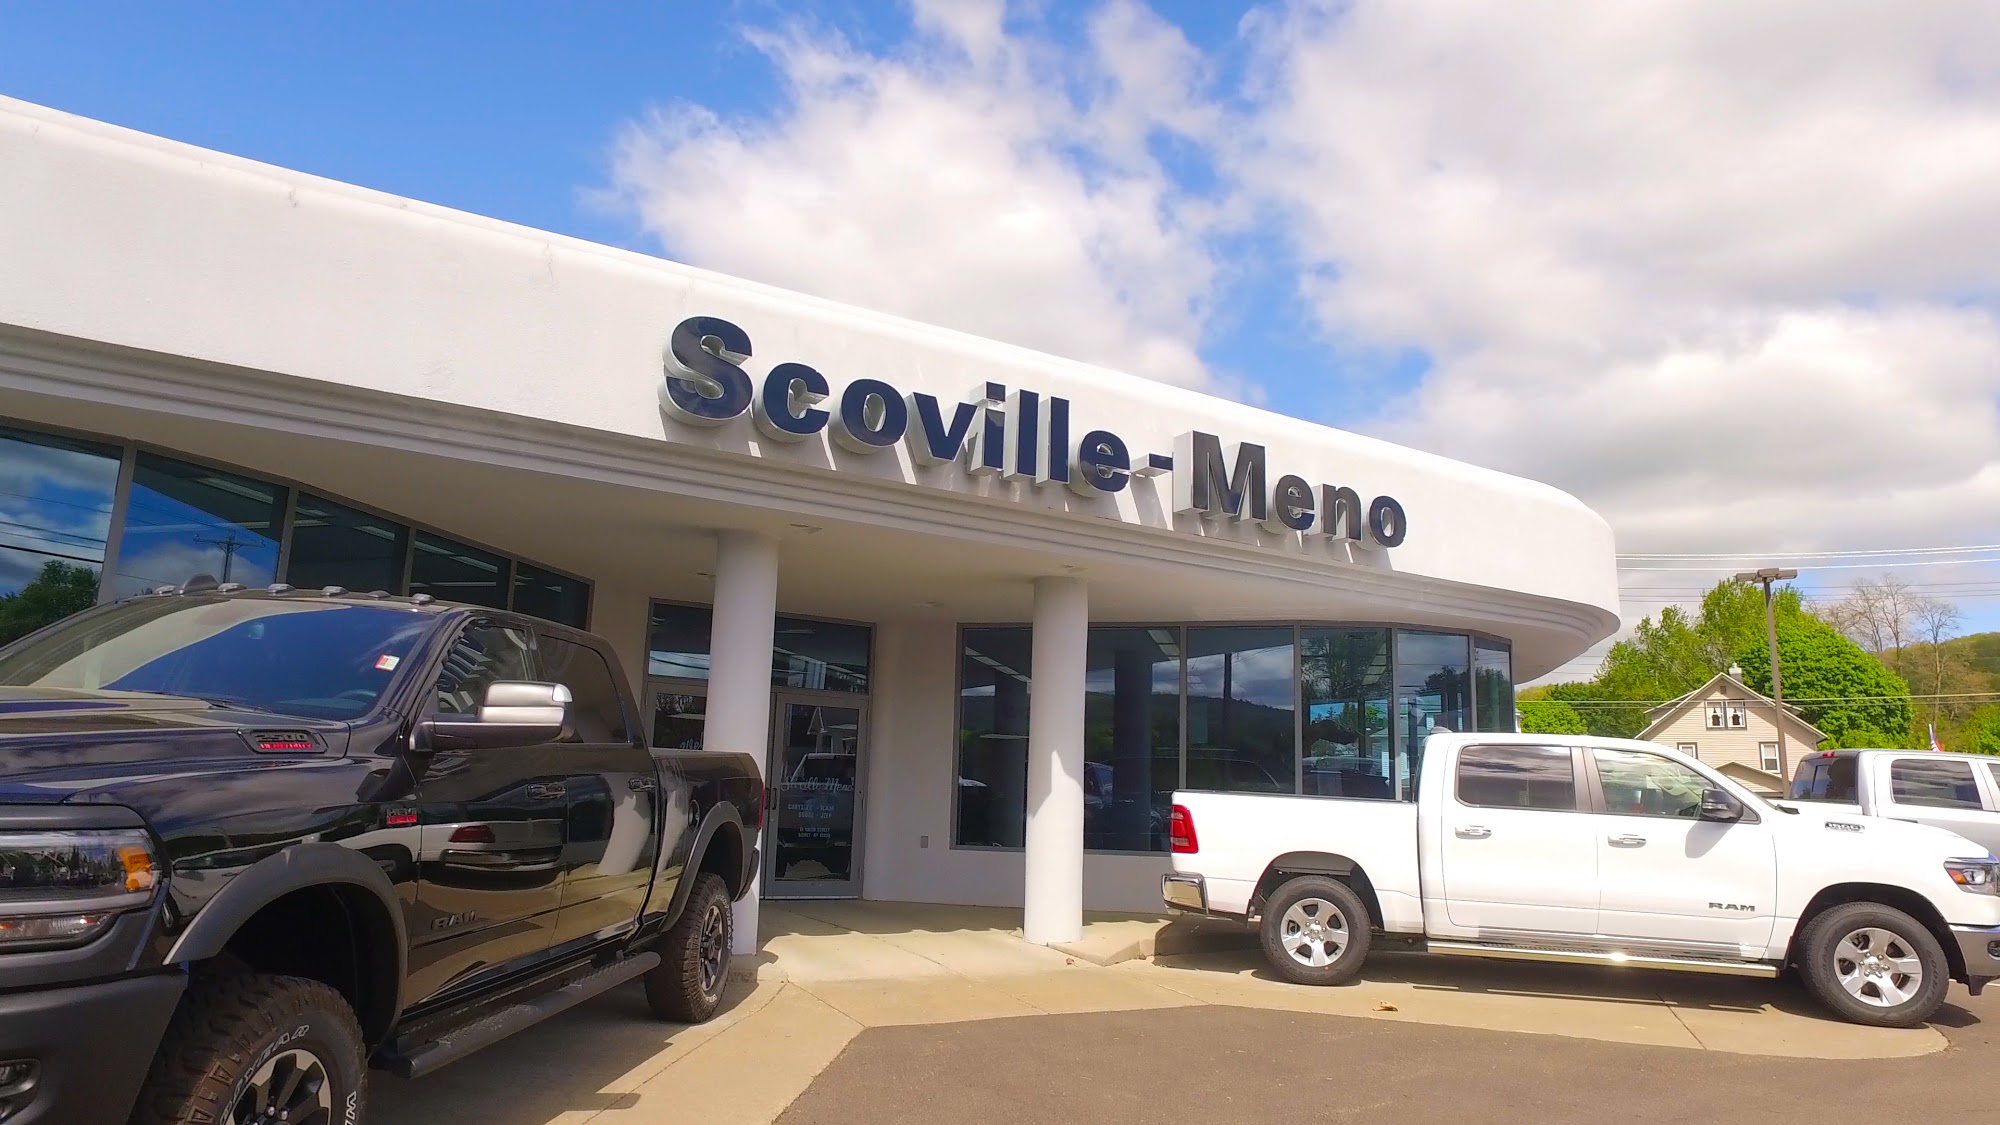 Scoville-Meno Chrysler- Dodge- Jeep, Inc.